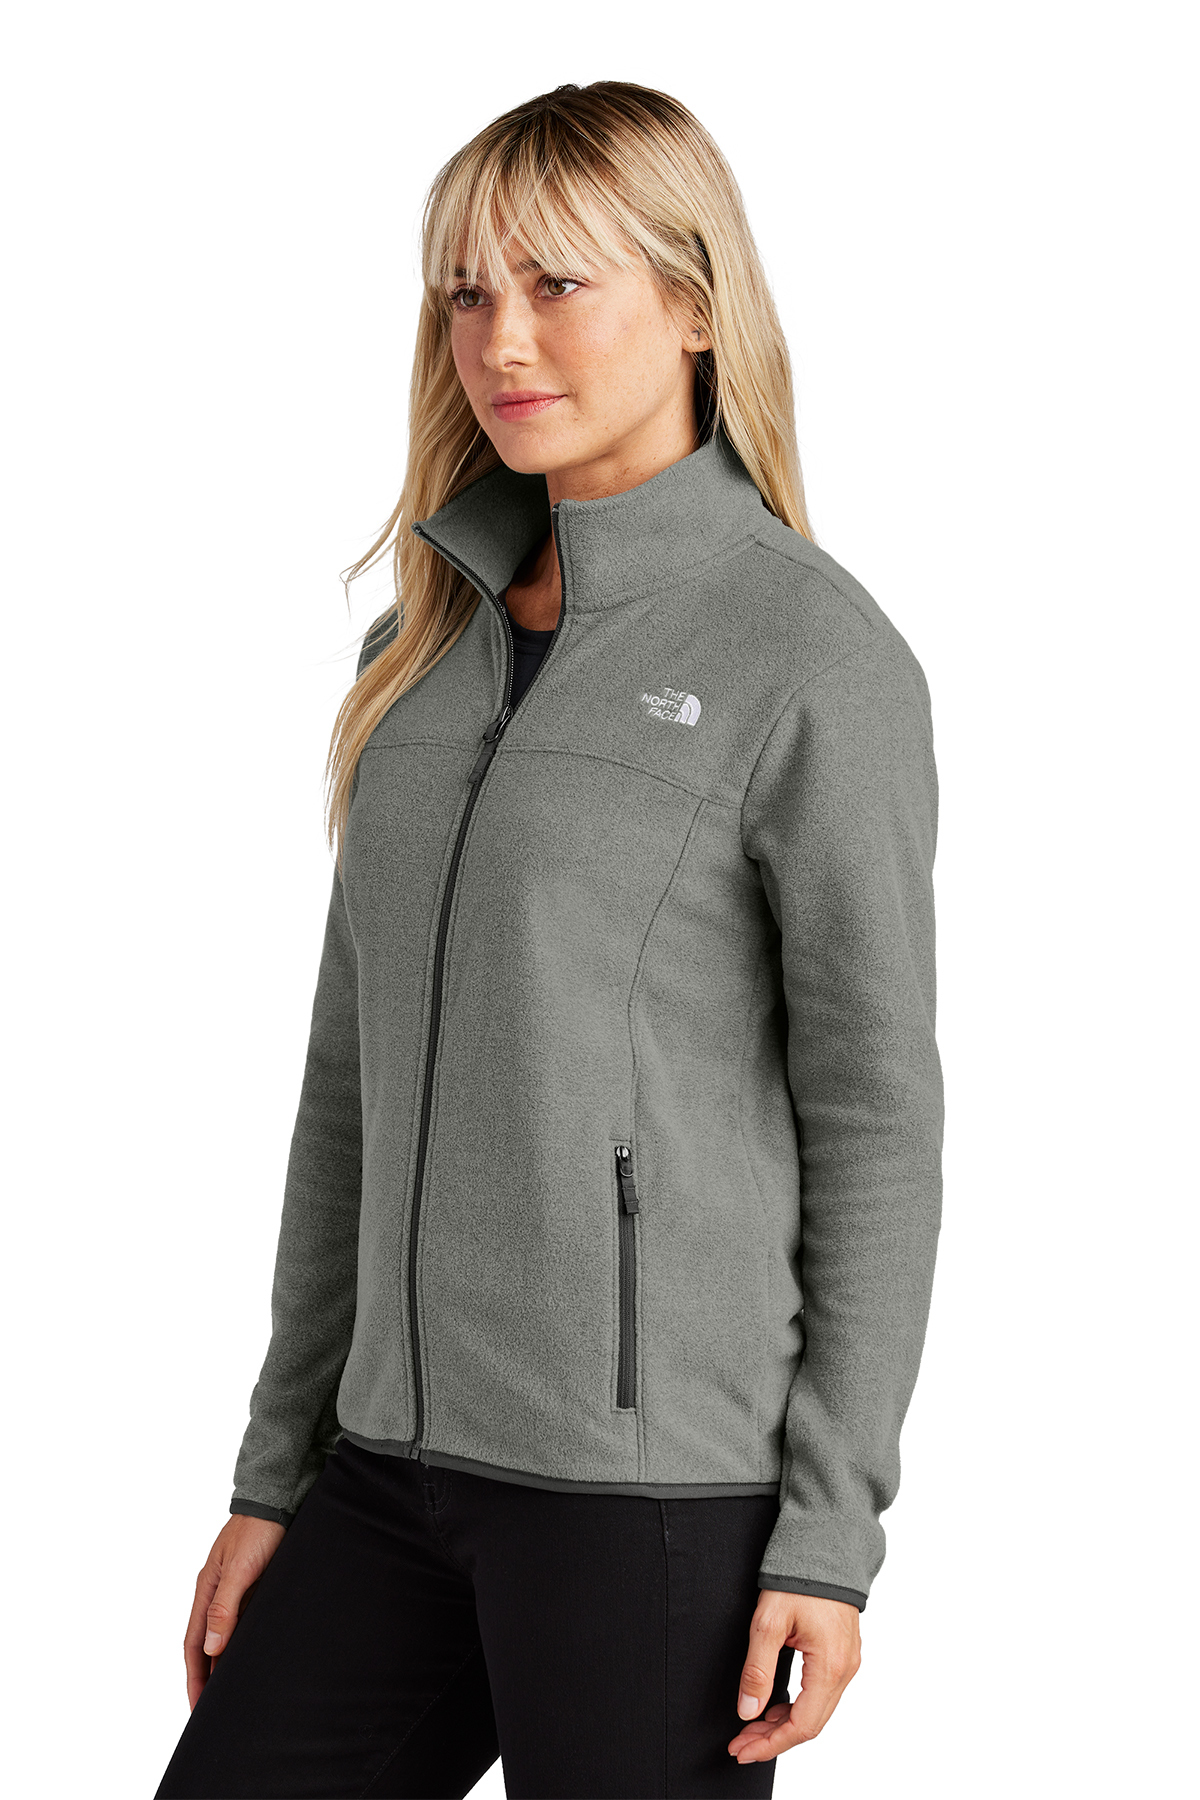 The North Face Ladies Glacier Full-Zip Fleece Jacket | Product | SanMar